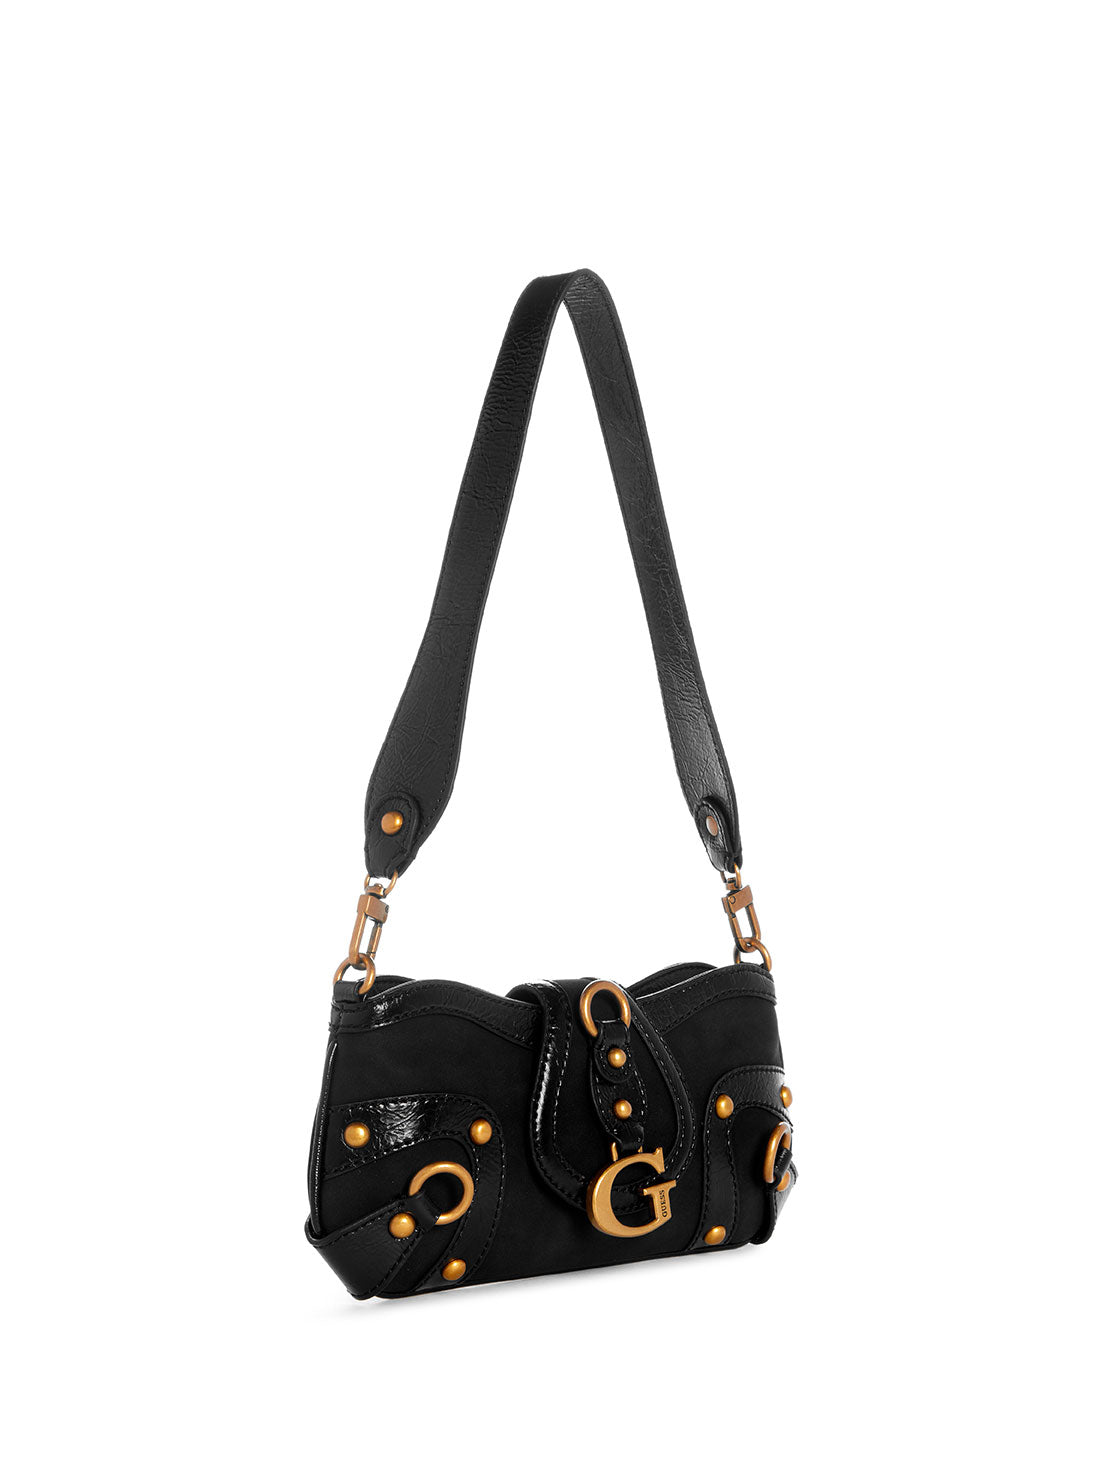 GUESS Women's Black Gloss Vintage Shoulder Bag EB899718 Angle View